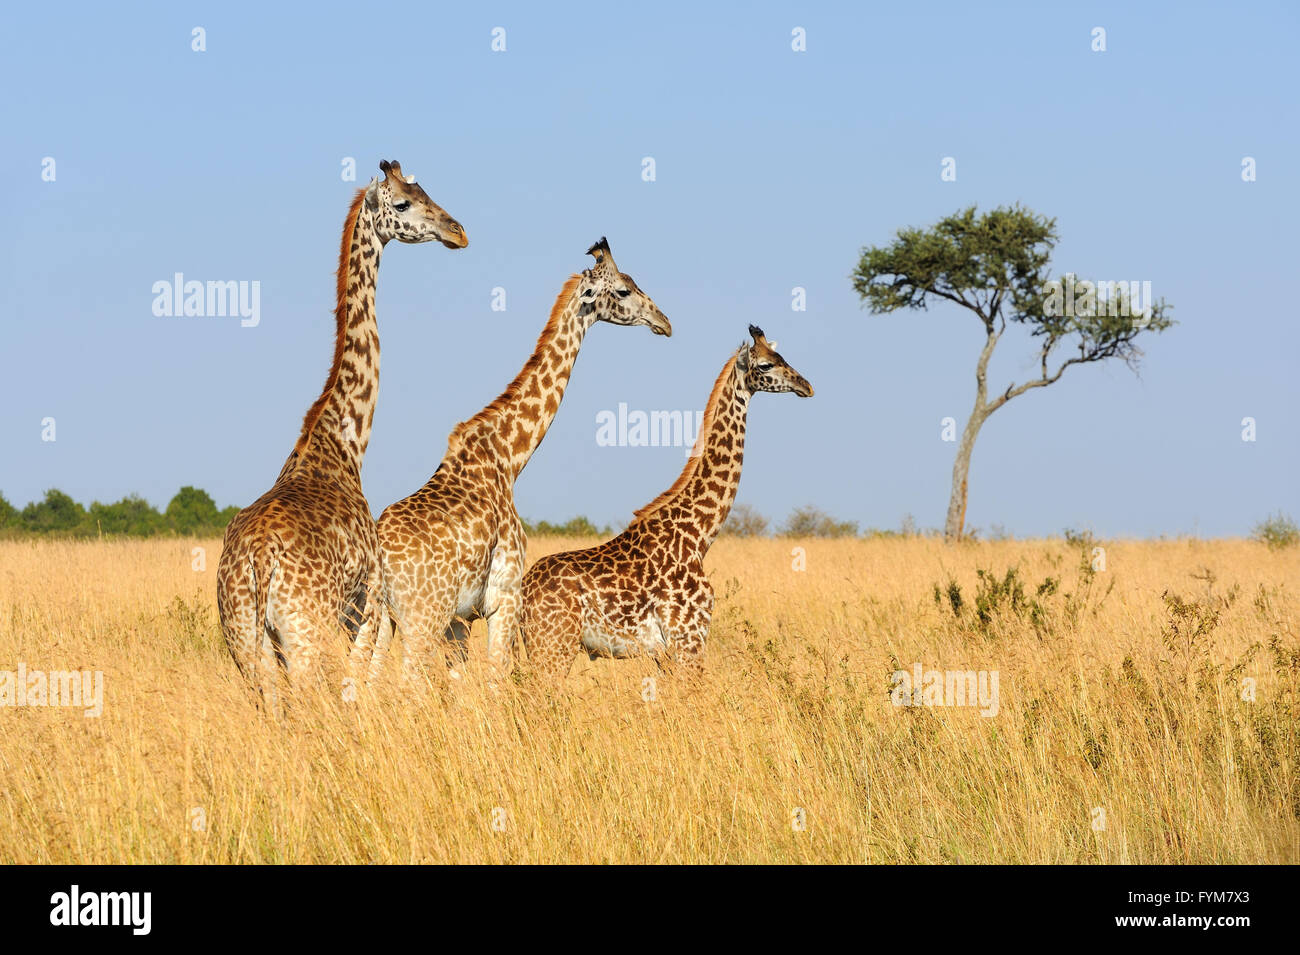 Giraffe in savannah, National park of Kenya, Africa Stock Photo